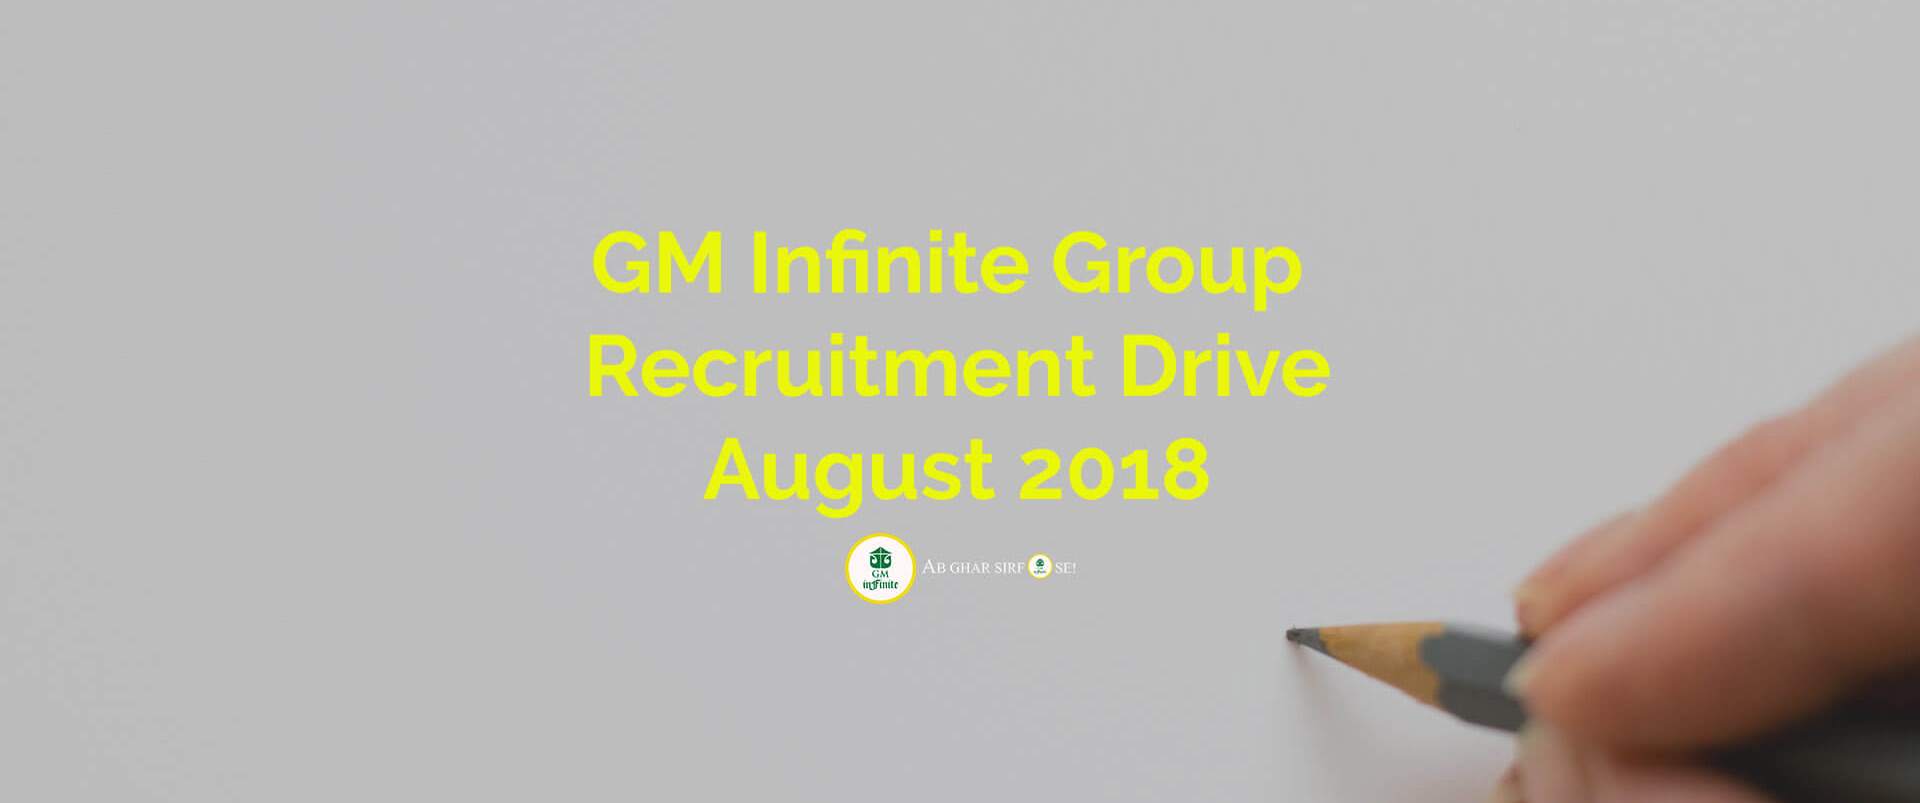 mba marketing gm infinite group recruitment drive august 2018